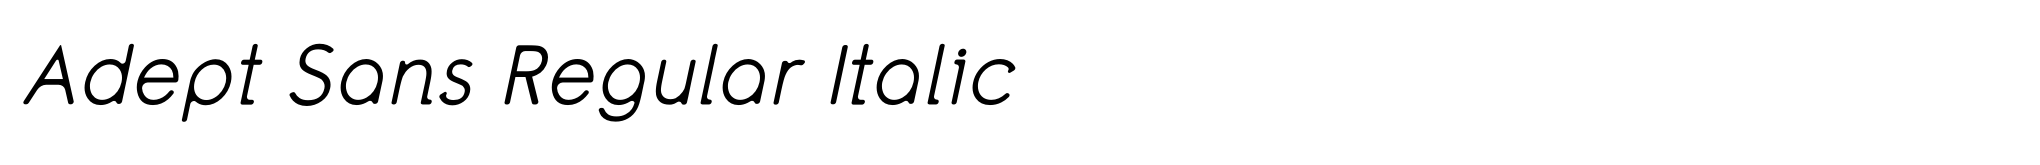 Adept Sans Regular Italic image